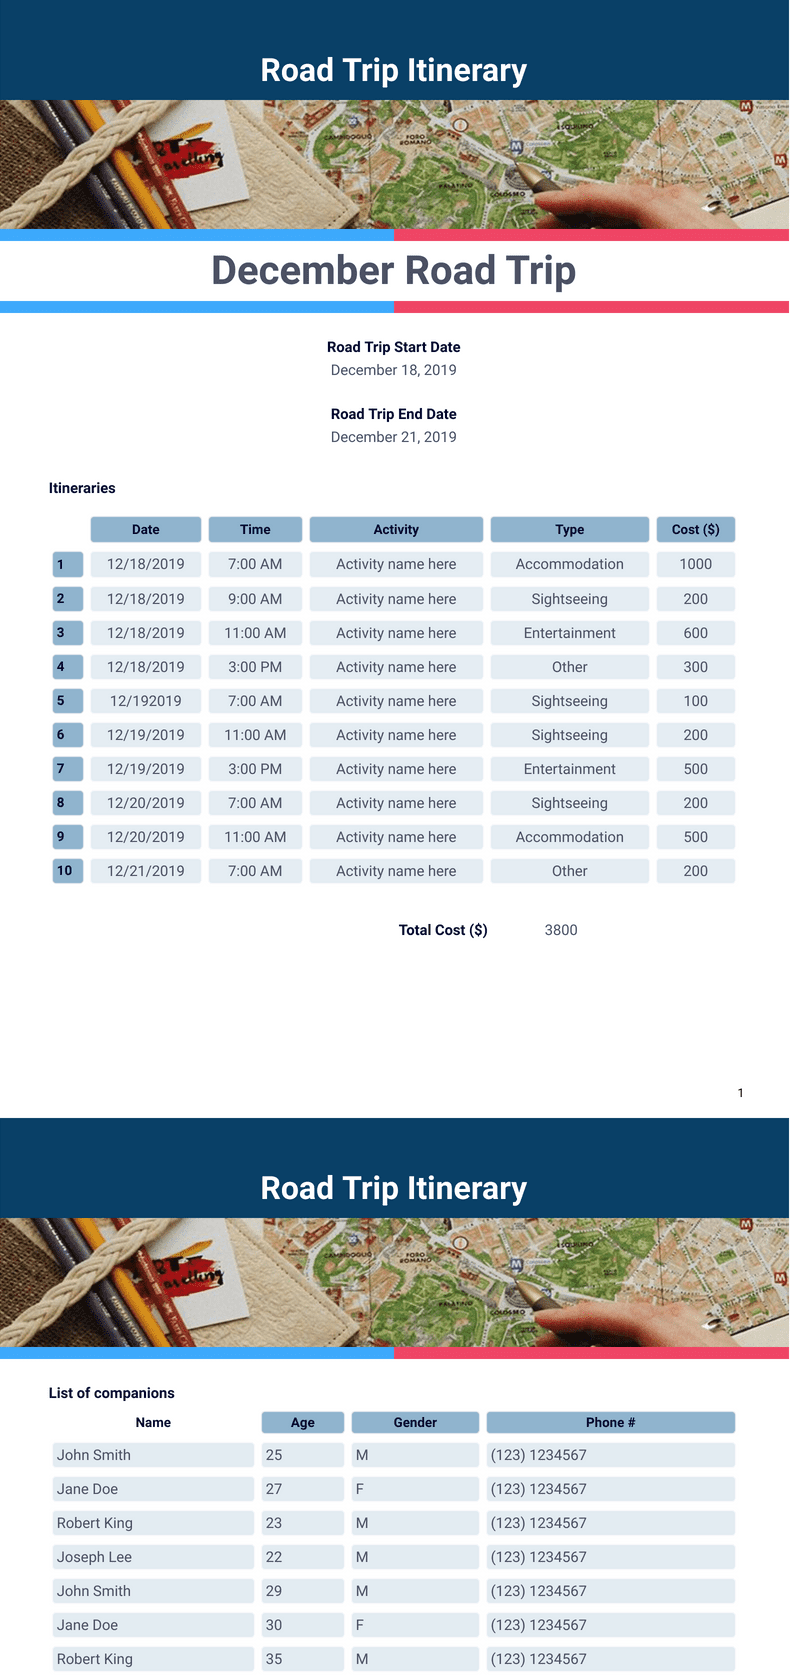 Road Trip Itinerary